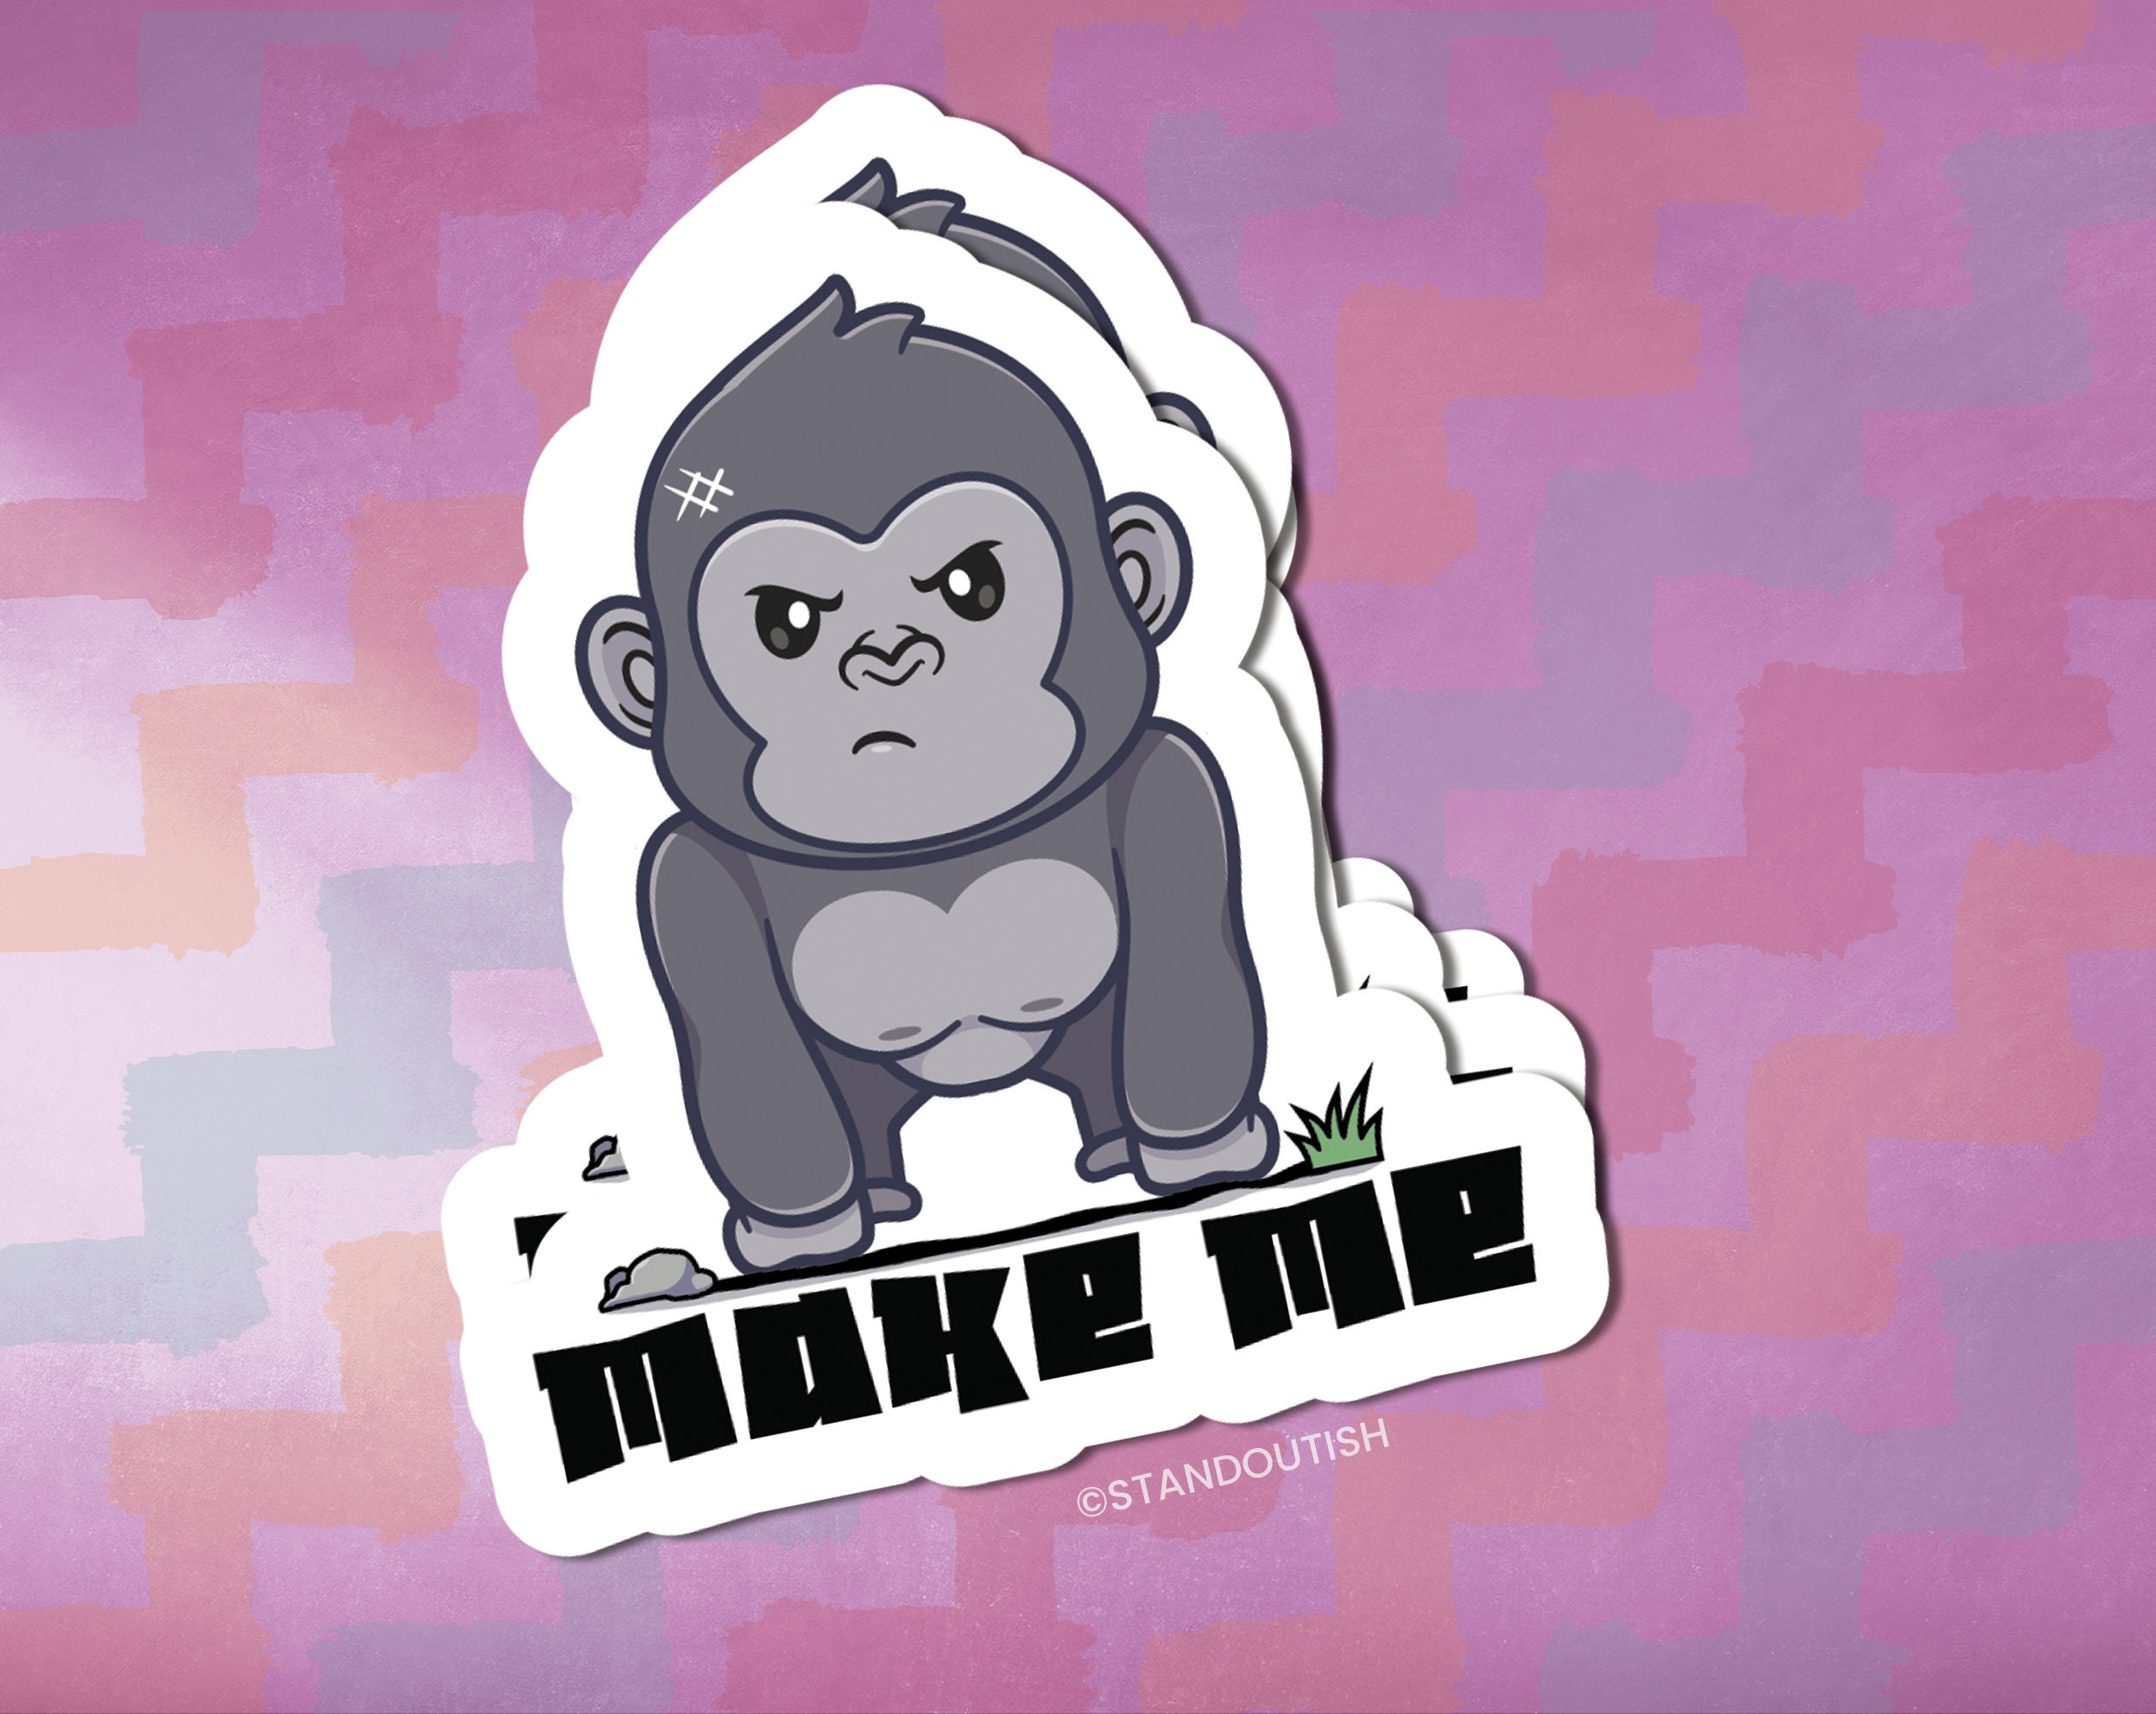 Buy Kaws x UNC - Die cut stickers - StickerApp